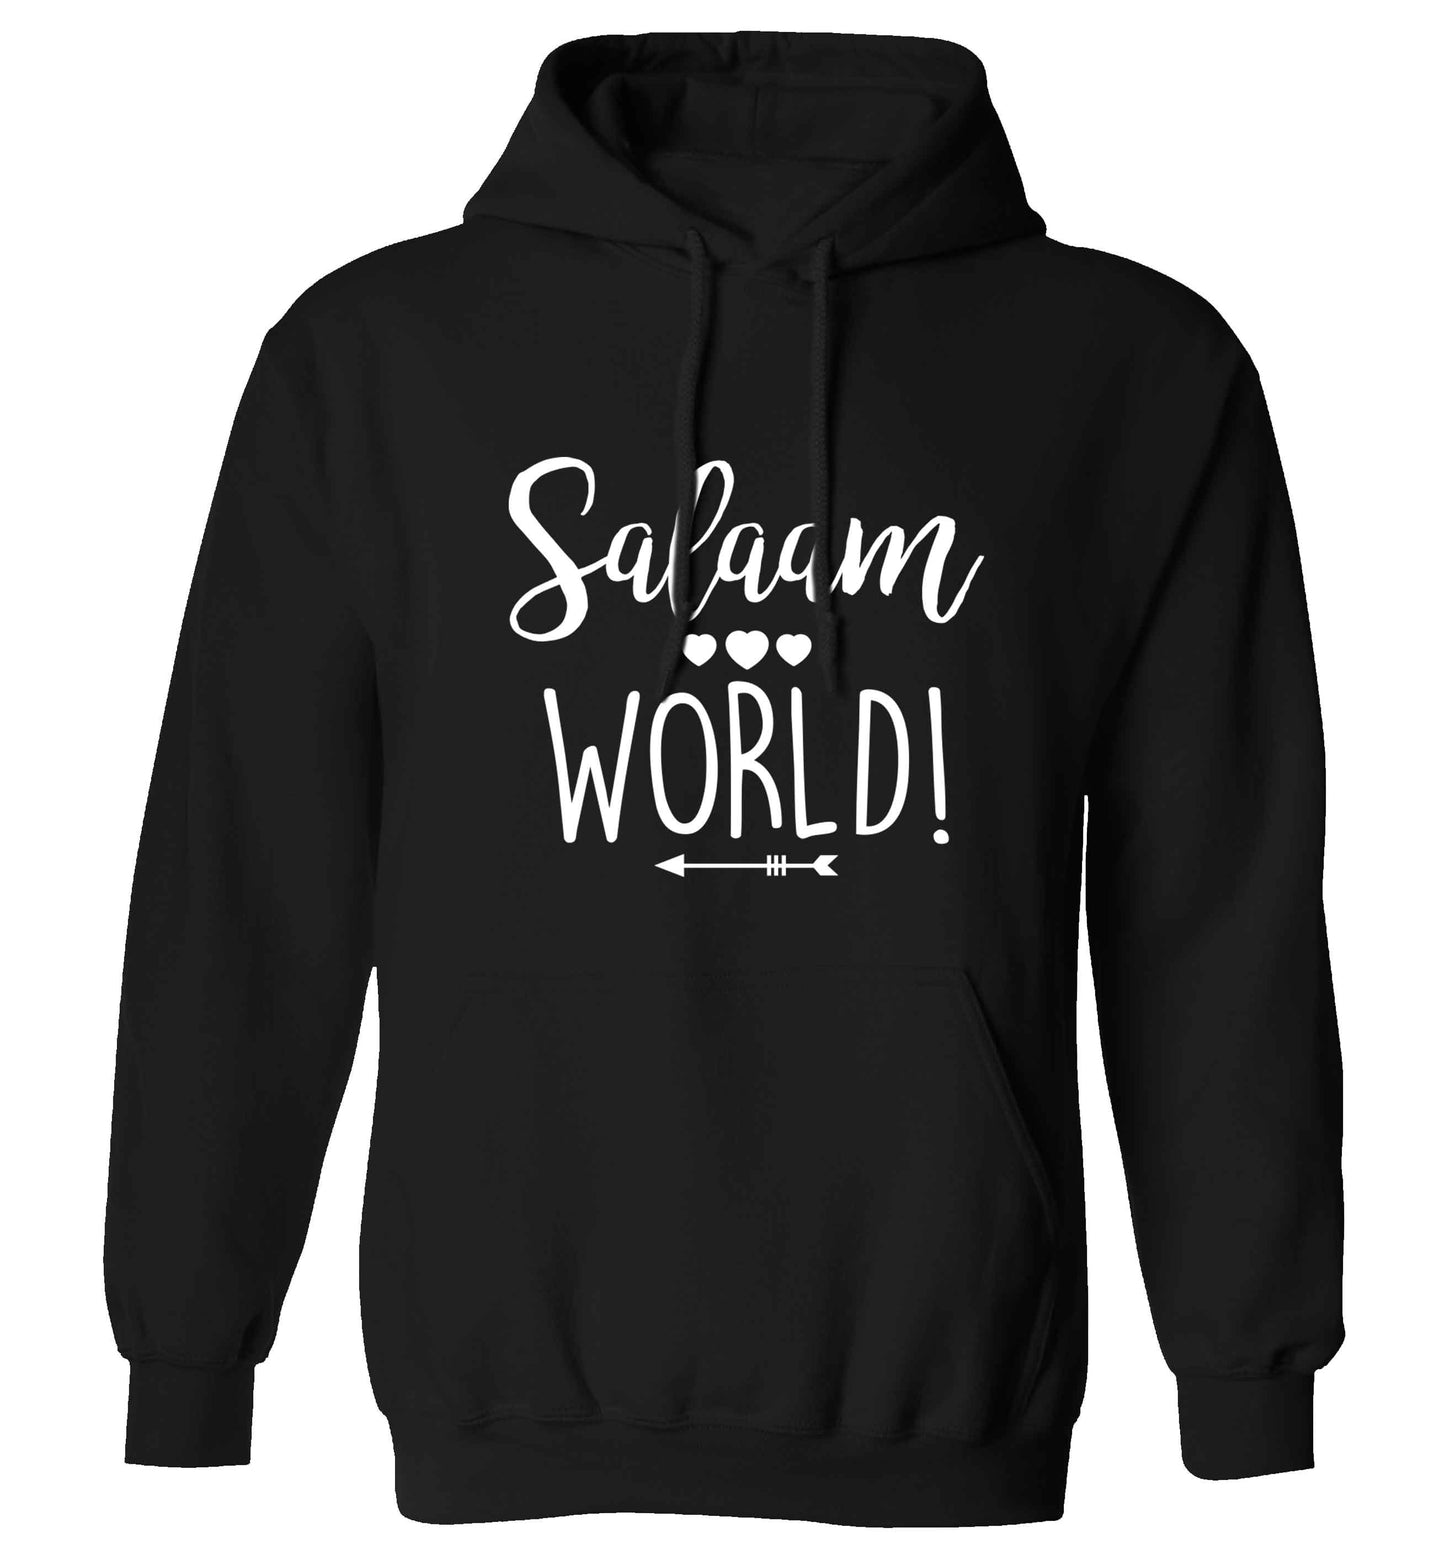 Salaam world adults unisex black hoodie 2XL